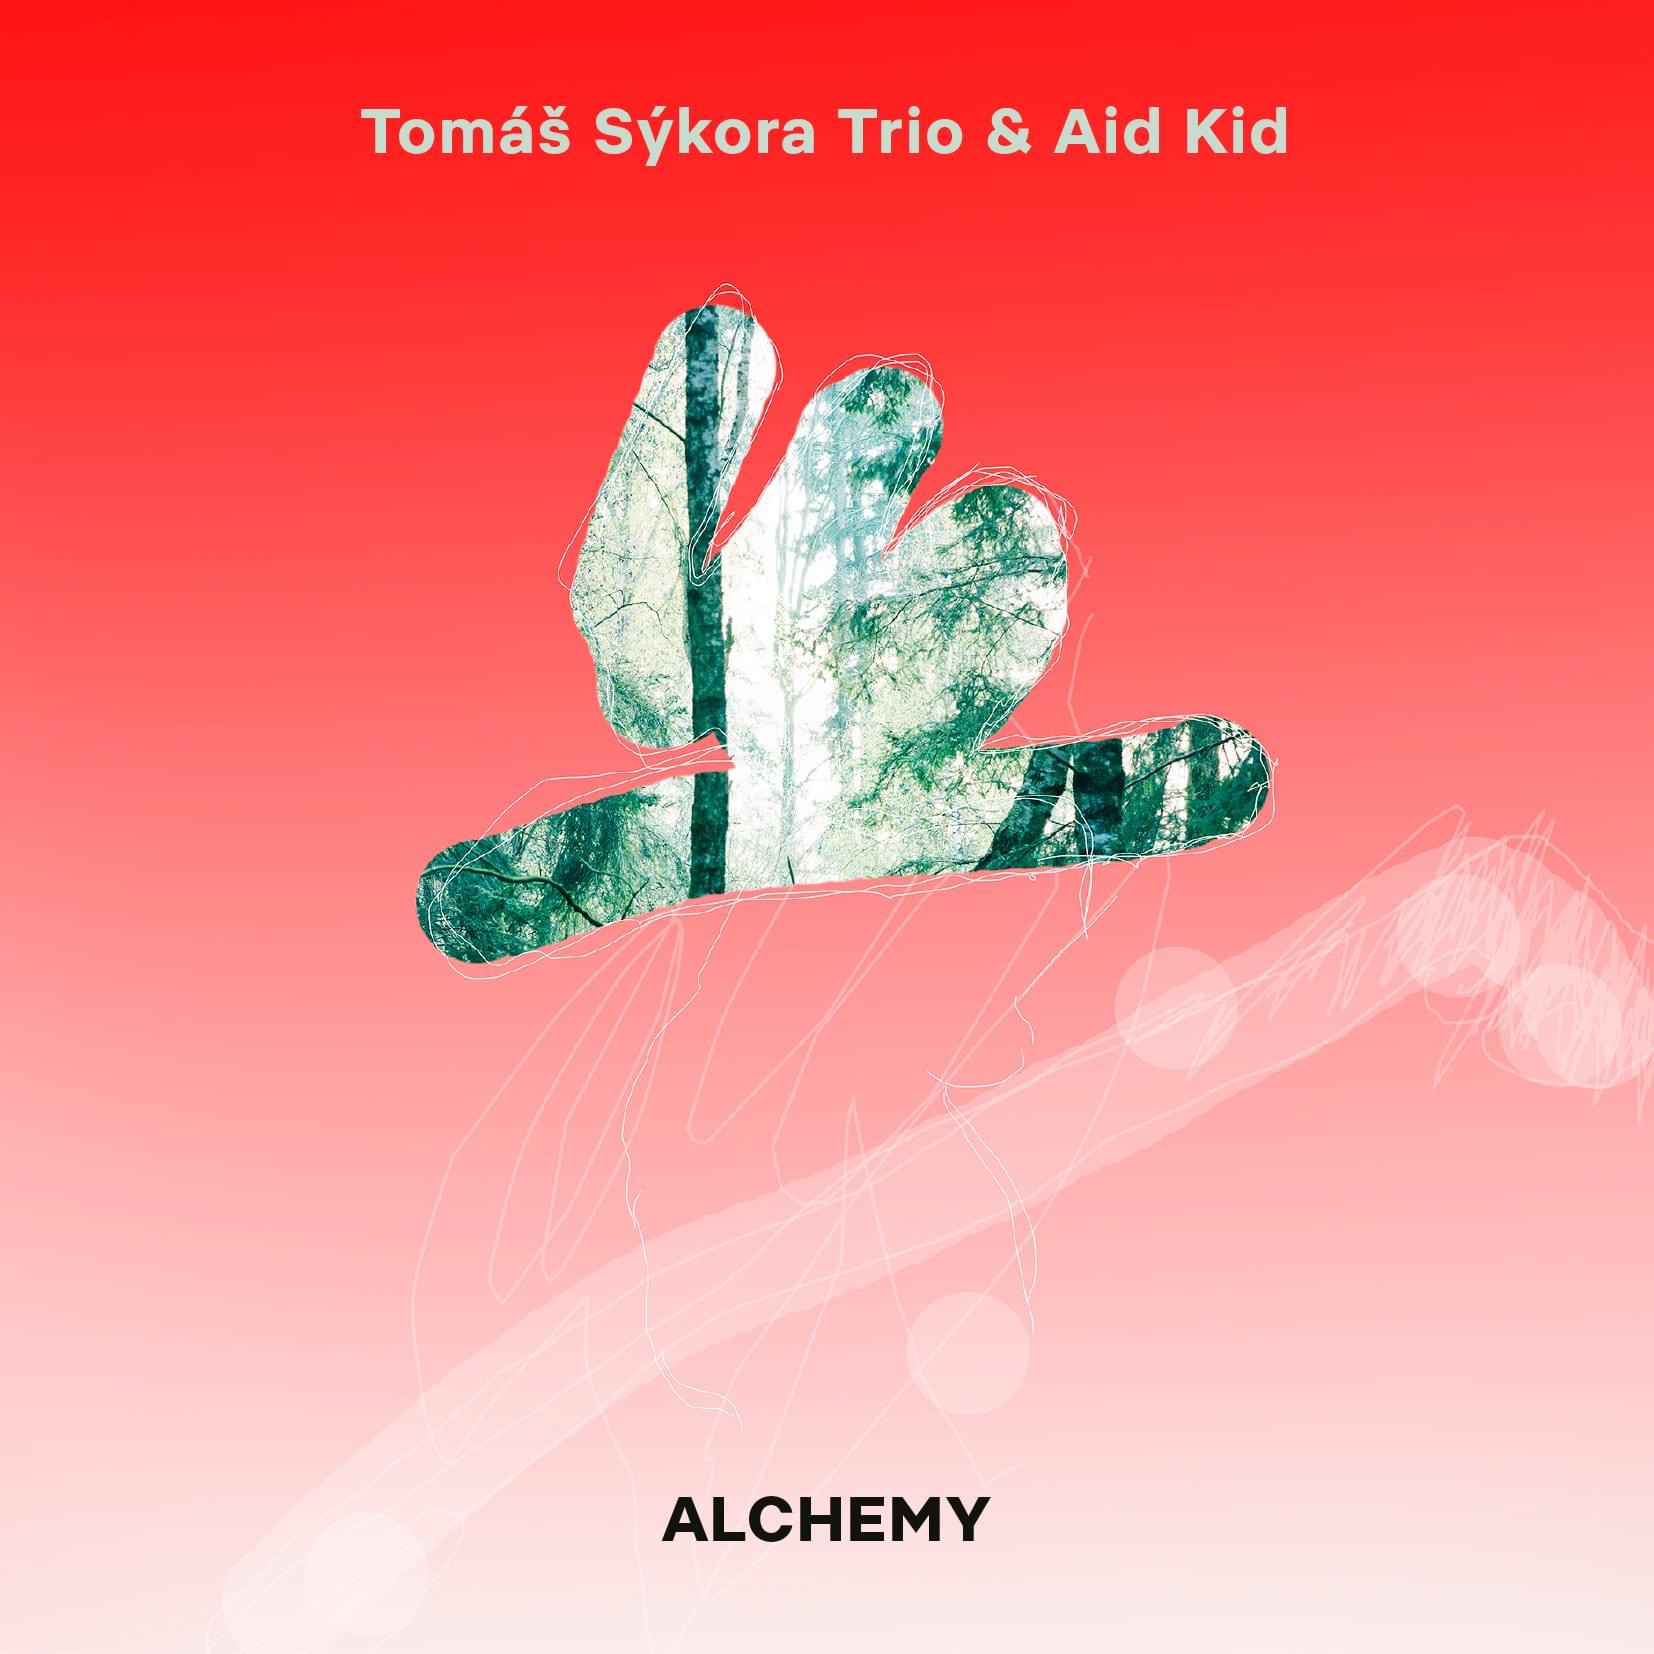 Cover of the album Alchemy by Tomas Sykora Trio & Aid Kid